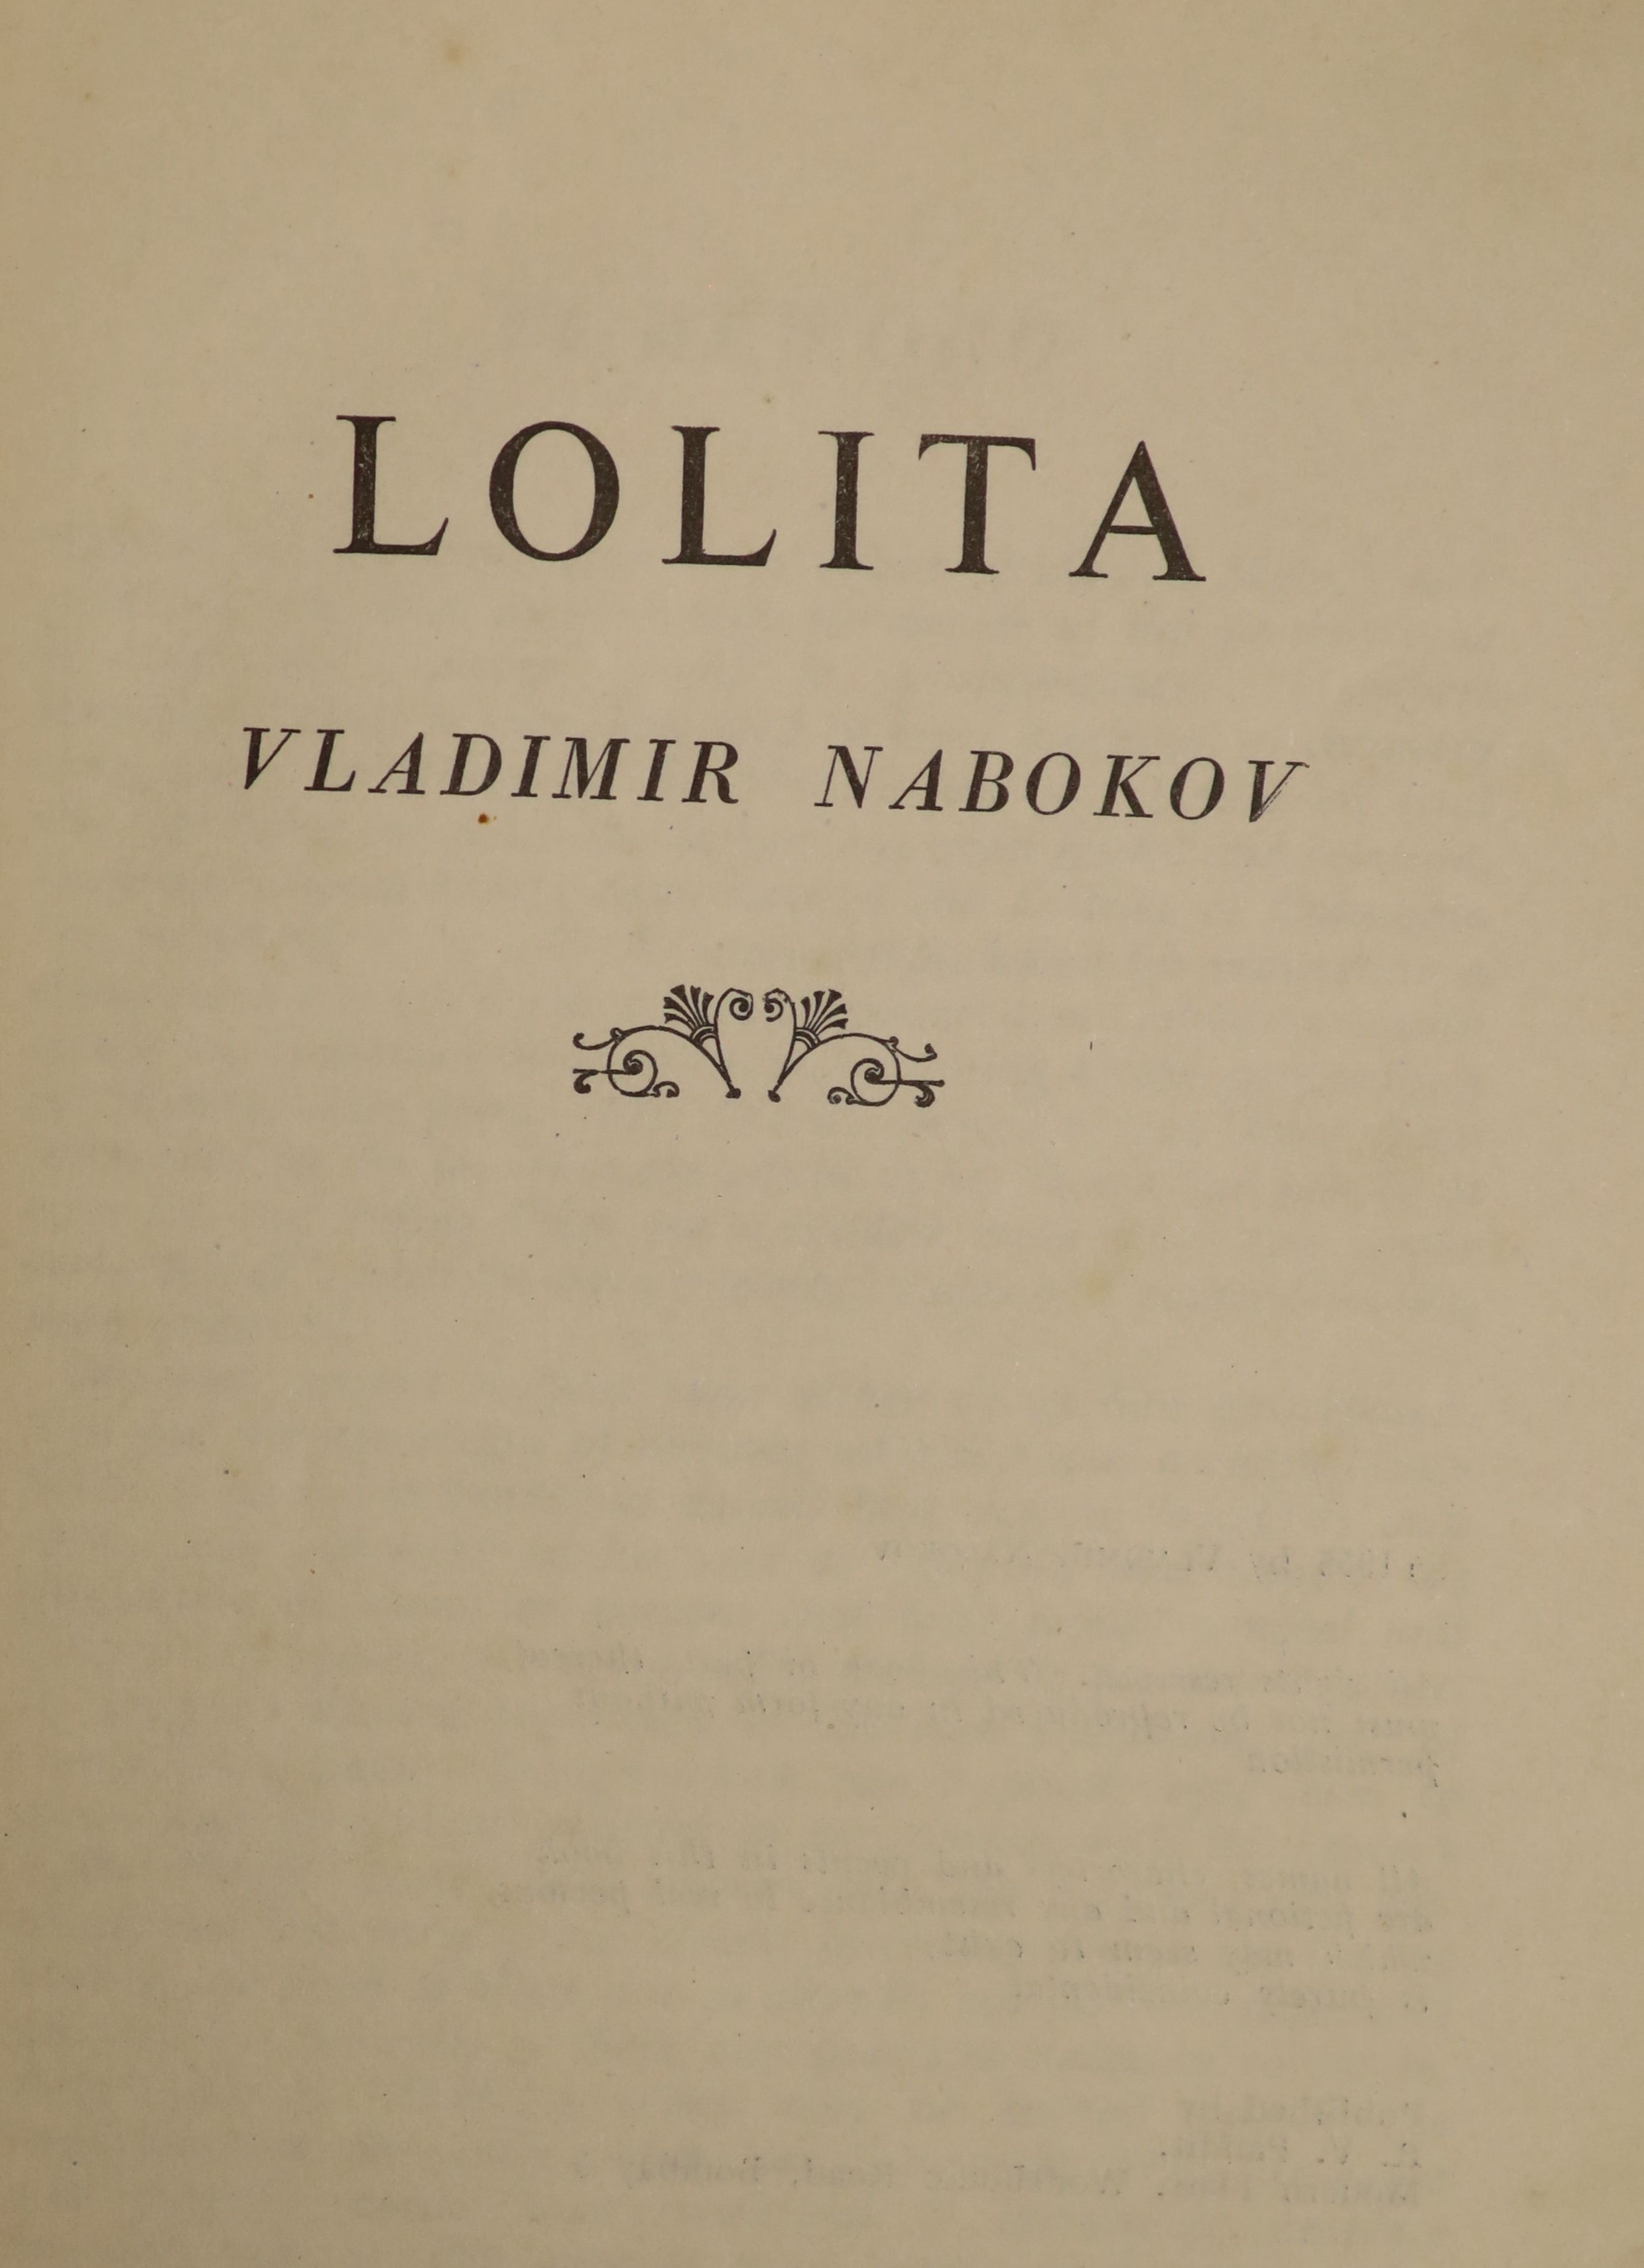 ° Nabokov, Vladimir - Lolita, 1st Indian edition, 8vo, cloth, R. V. Pandit, Bombay, 1955 - Image 2 of 3